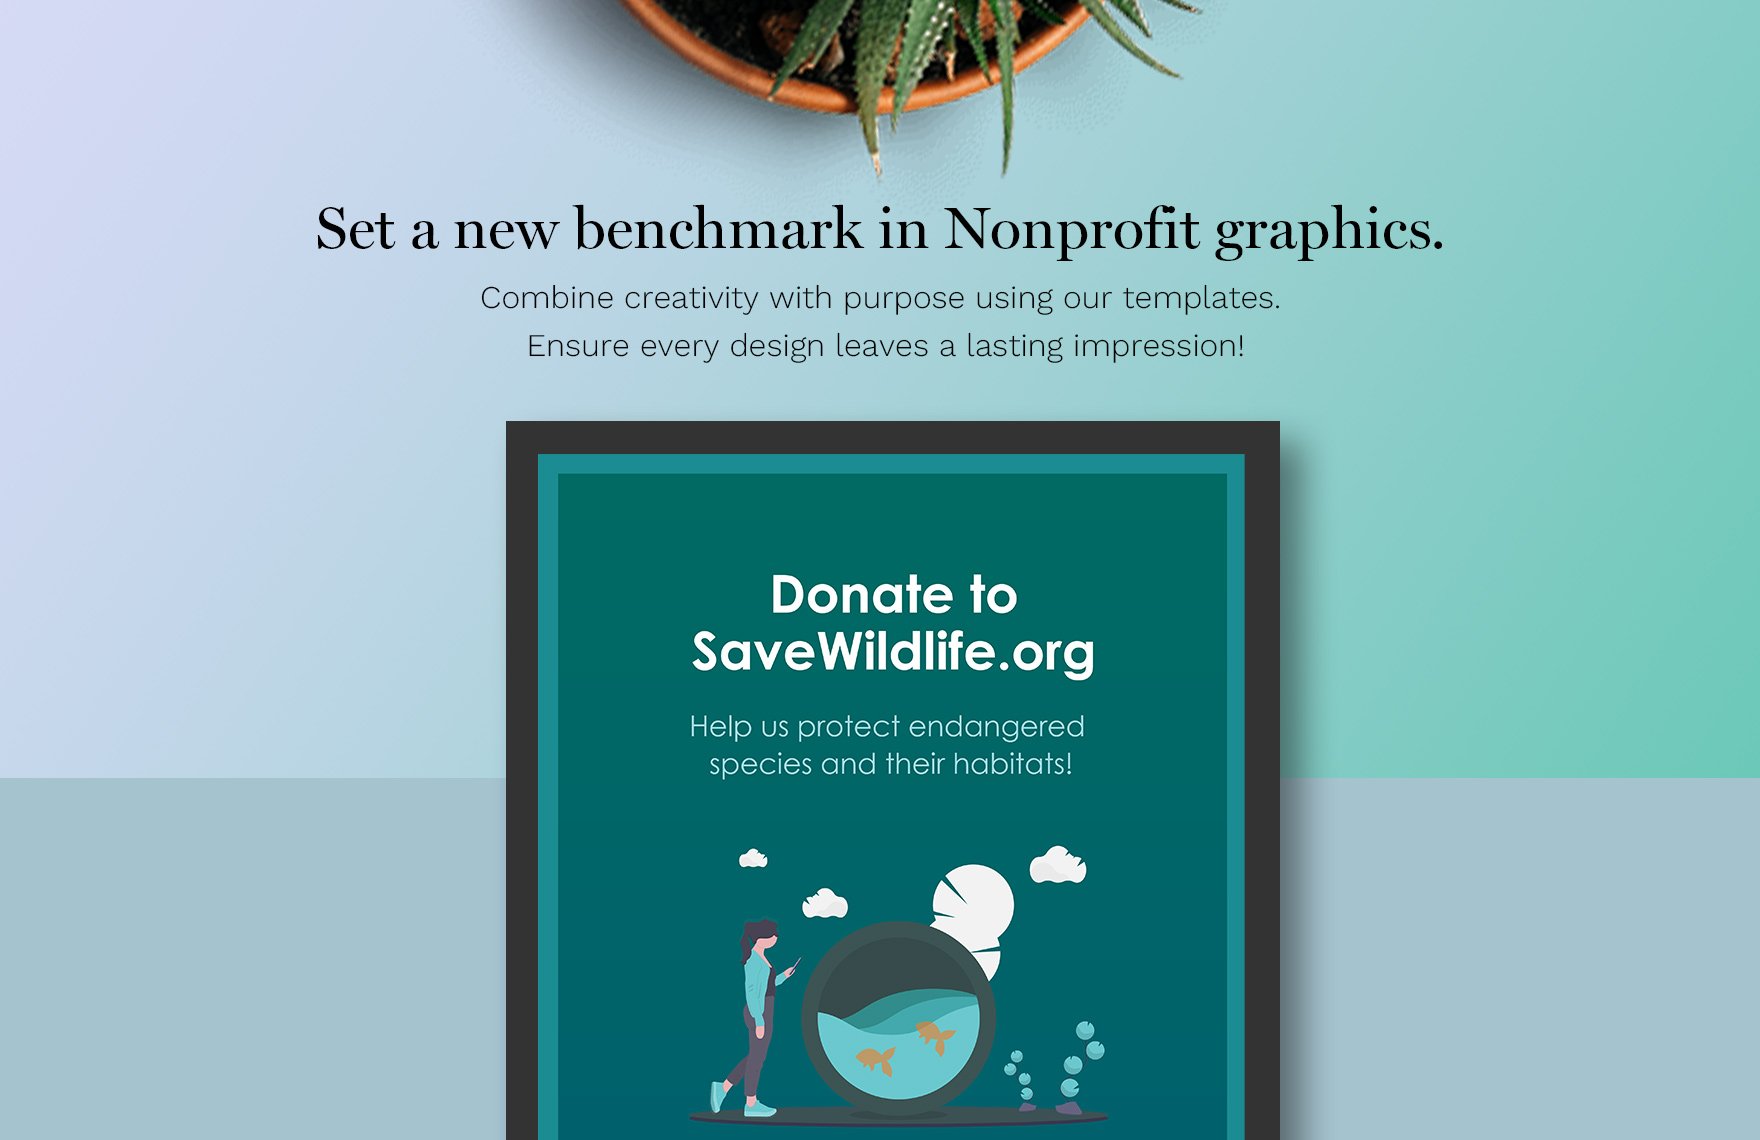 Nonprofit Organization Donation Information Signage Template